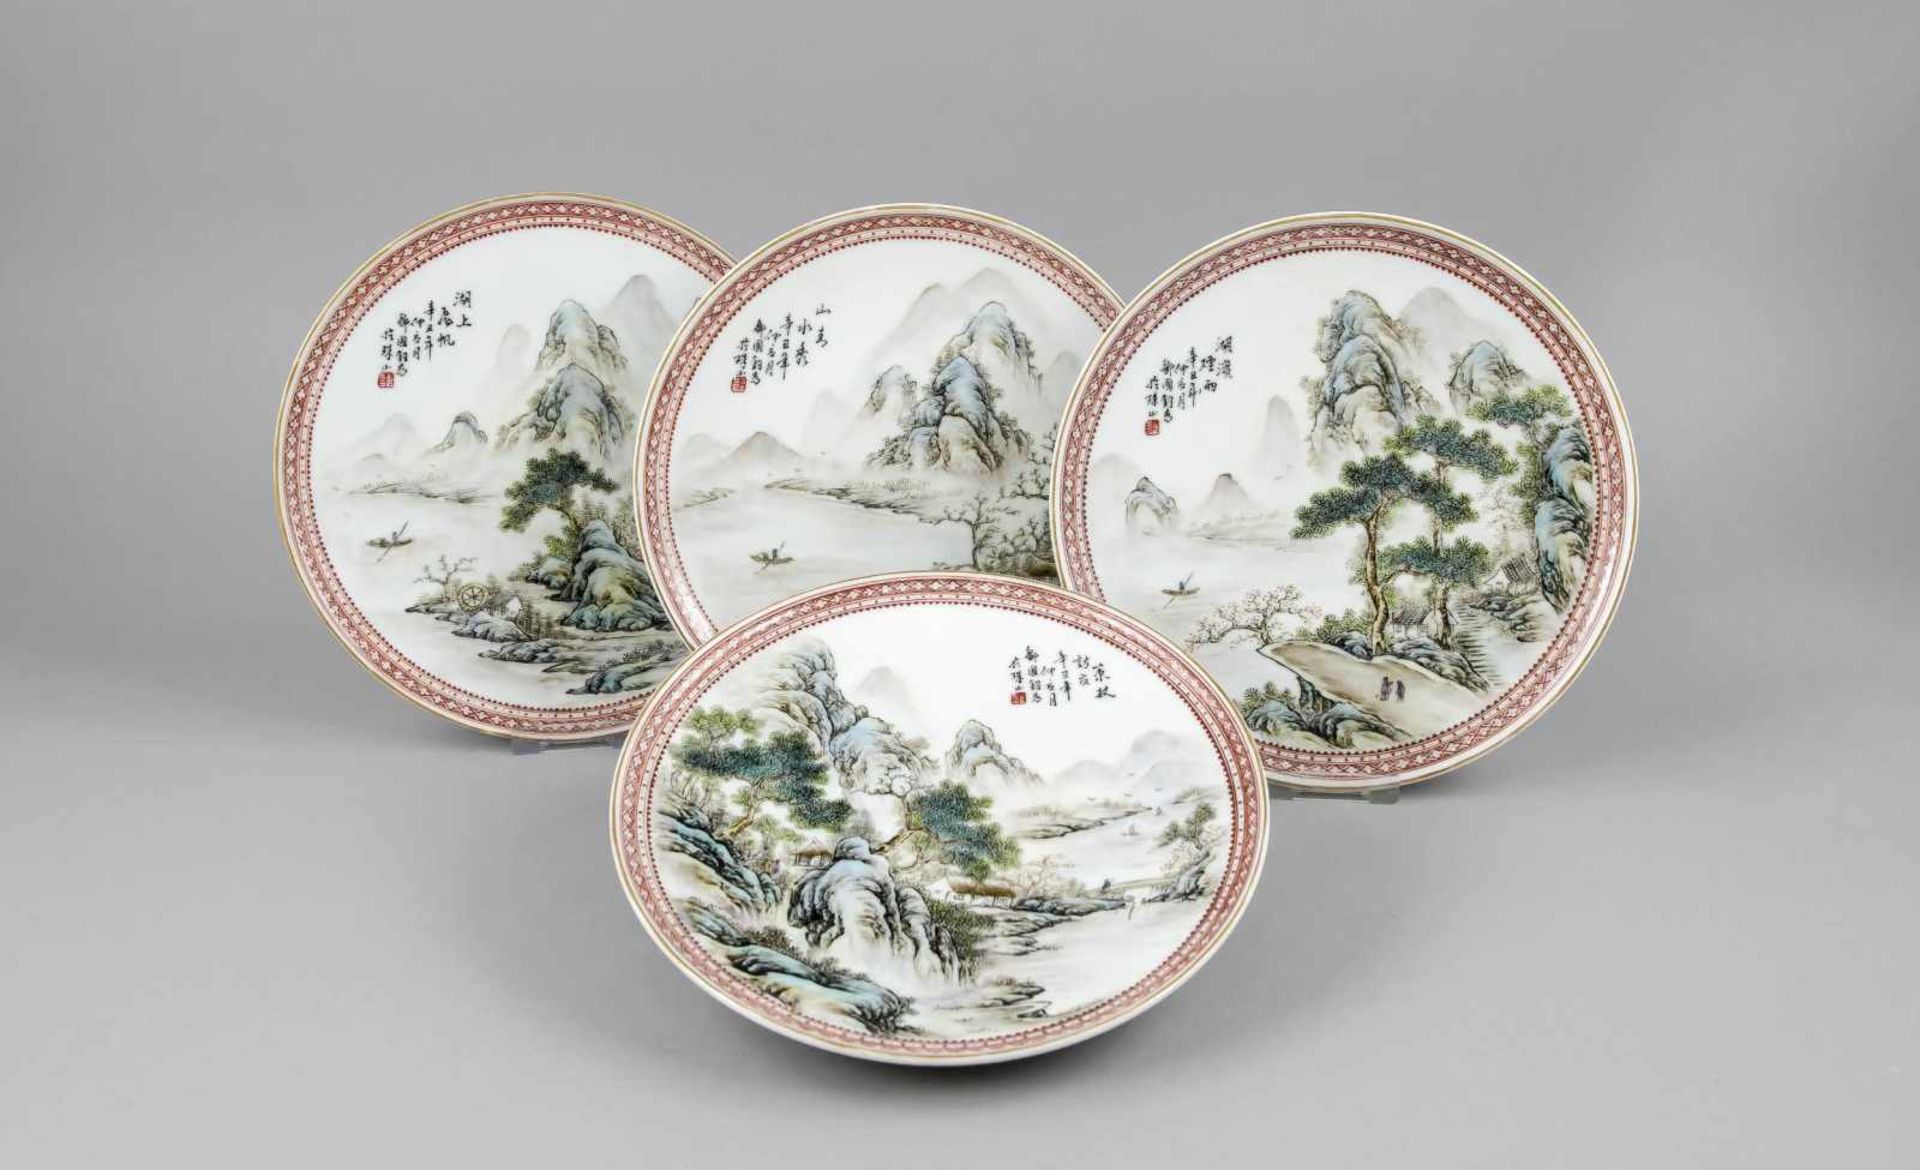 4 Teller mit Landschaften, China 20. Jh., Ø 23,5 cm4 plates with landscapes, China, 20th cent., Ø